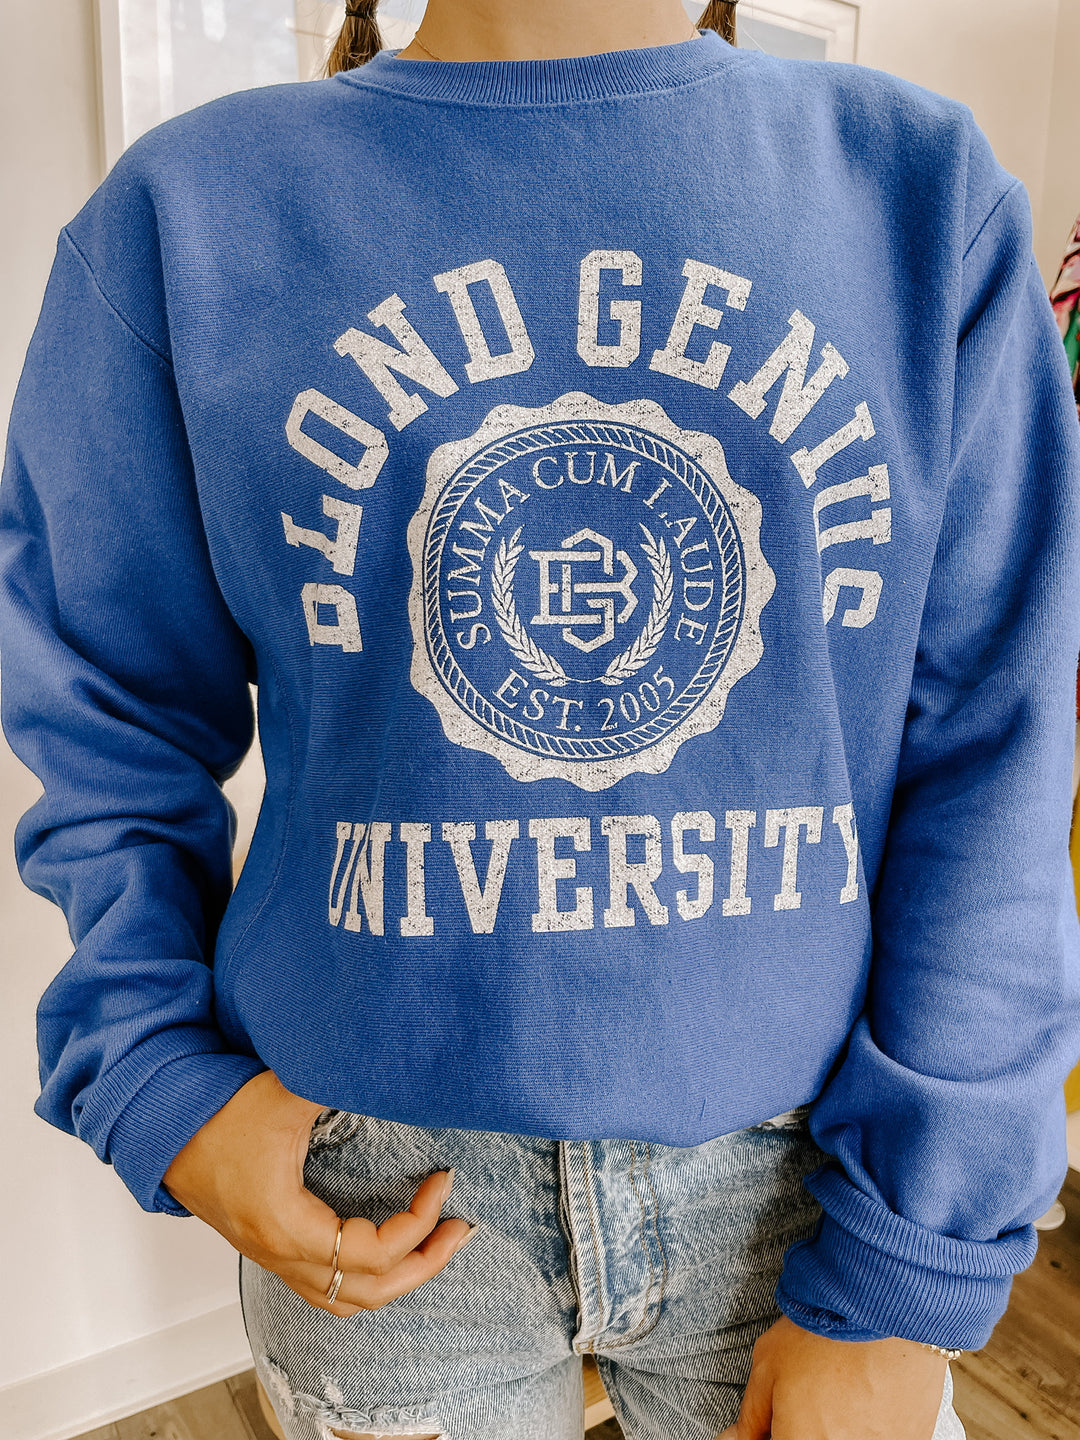 Blond Genius - Blond Genius University in Royal Blue with White